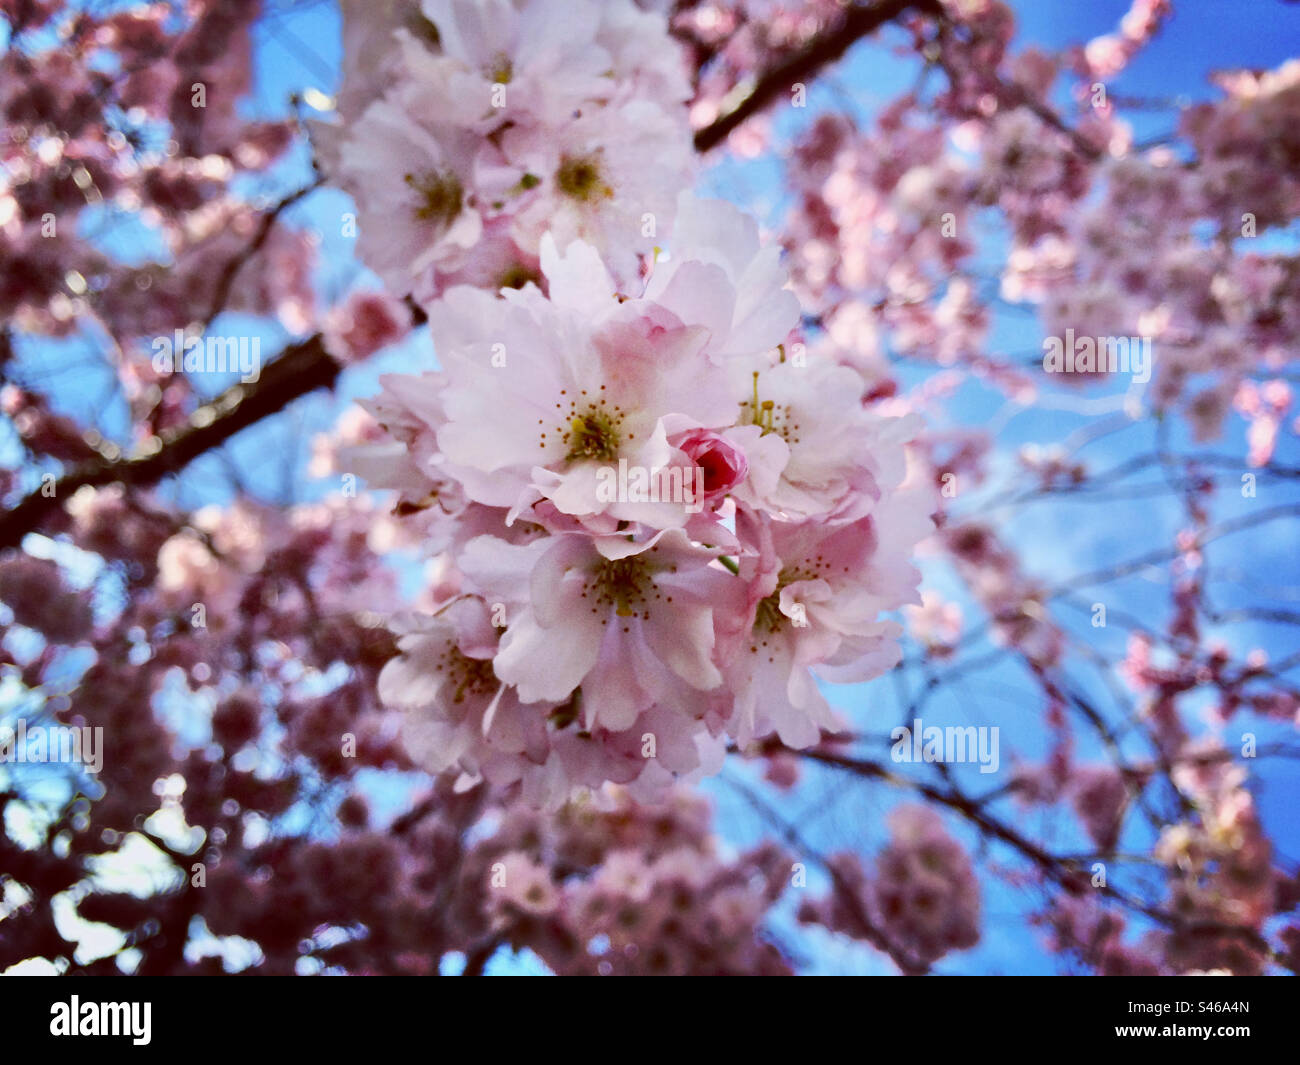 Cherry blossom in the air, York, UK Stock Photo